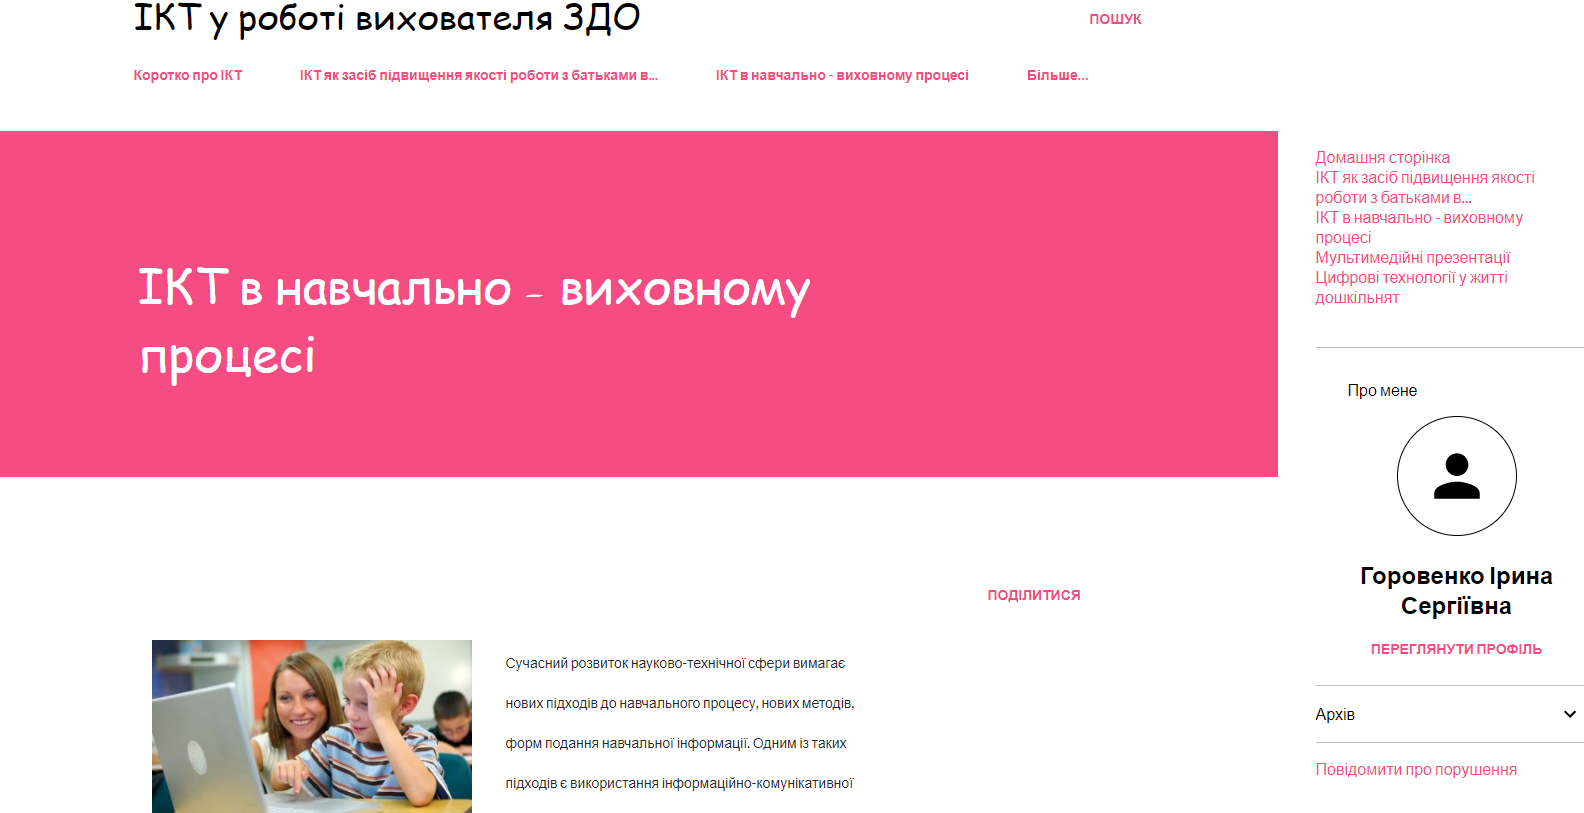 Горовенко ІКТ блог 3.png